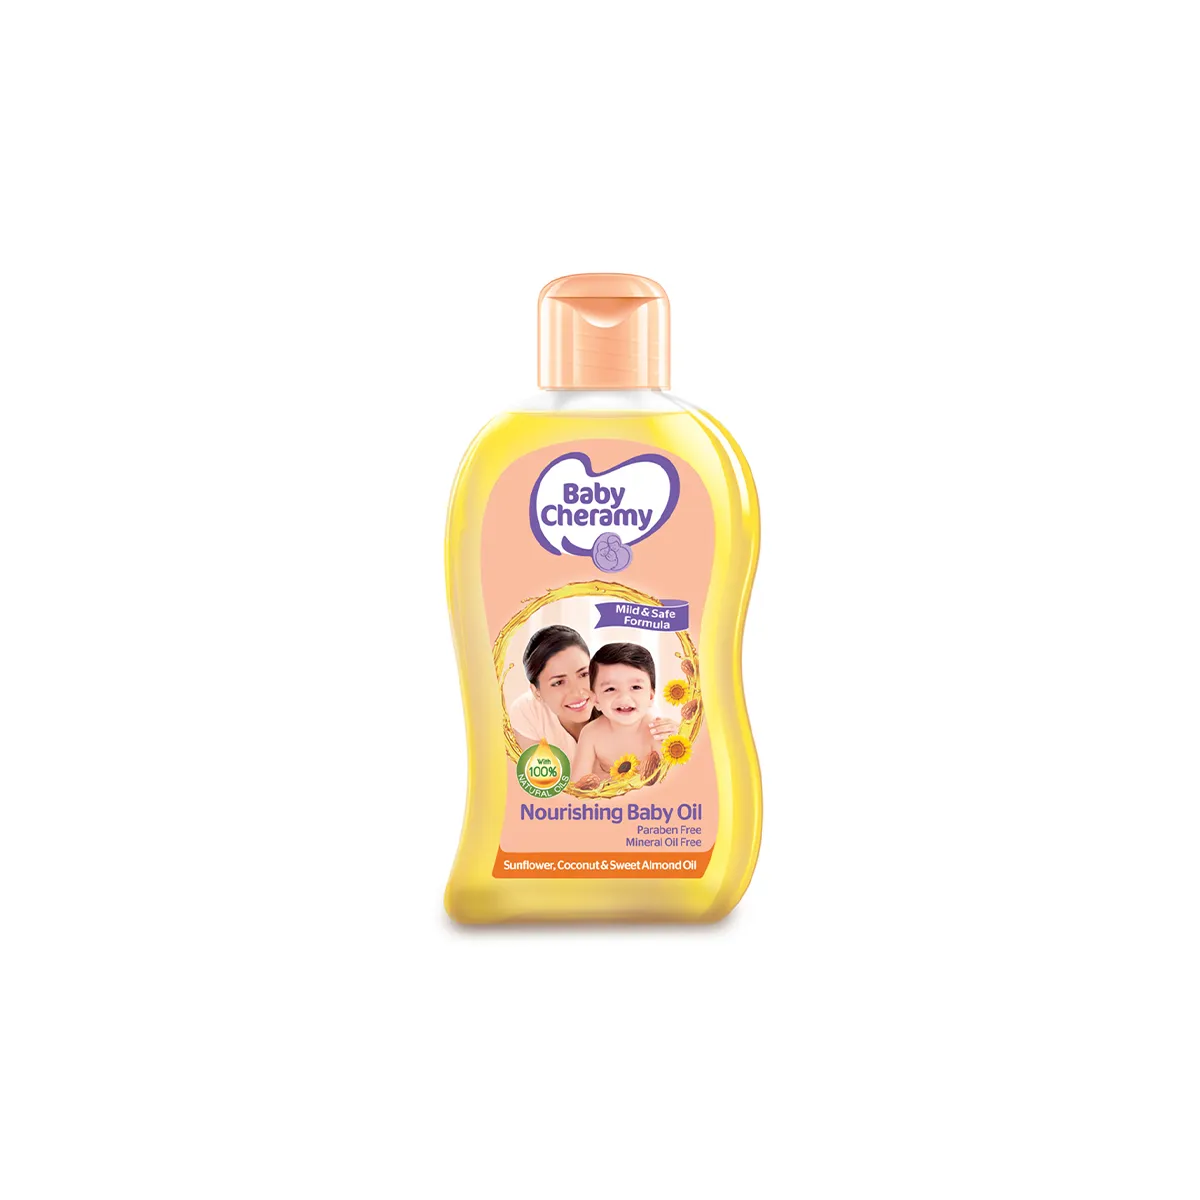 First product image of Baby Cheramy Nourishing Baby Oil 50ml